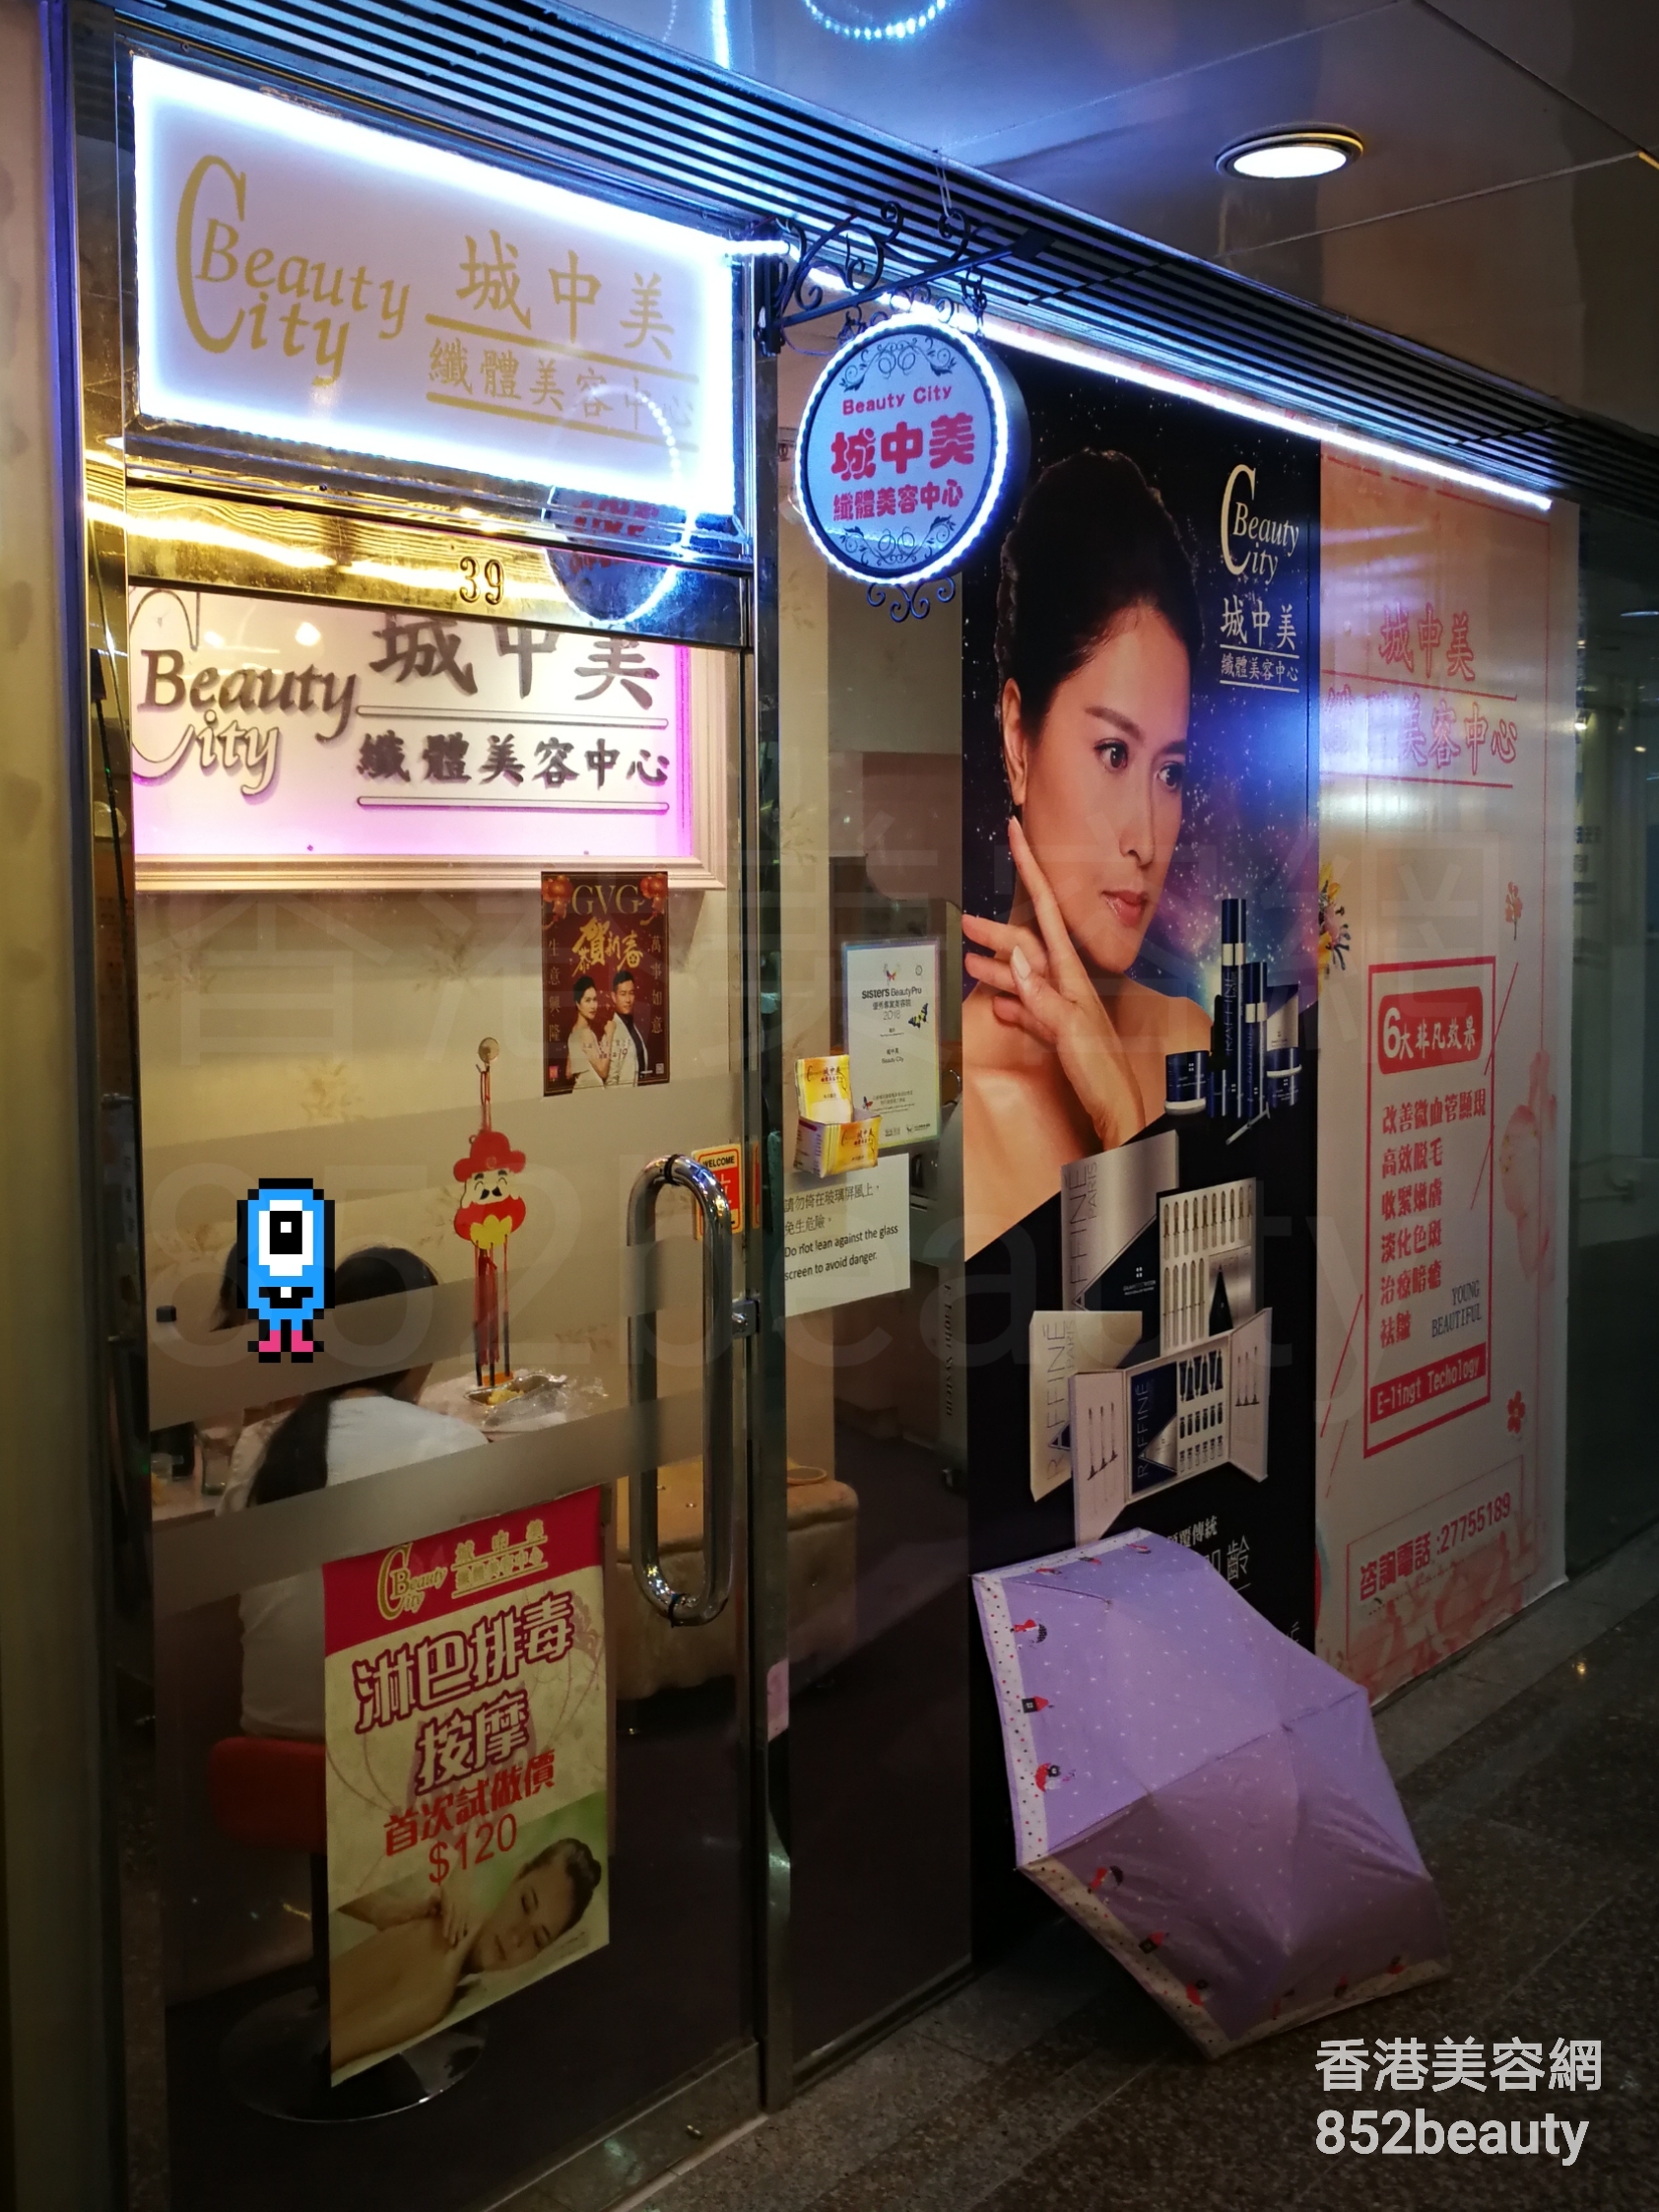 Beauty Salon: 城中美 纖體美容中心